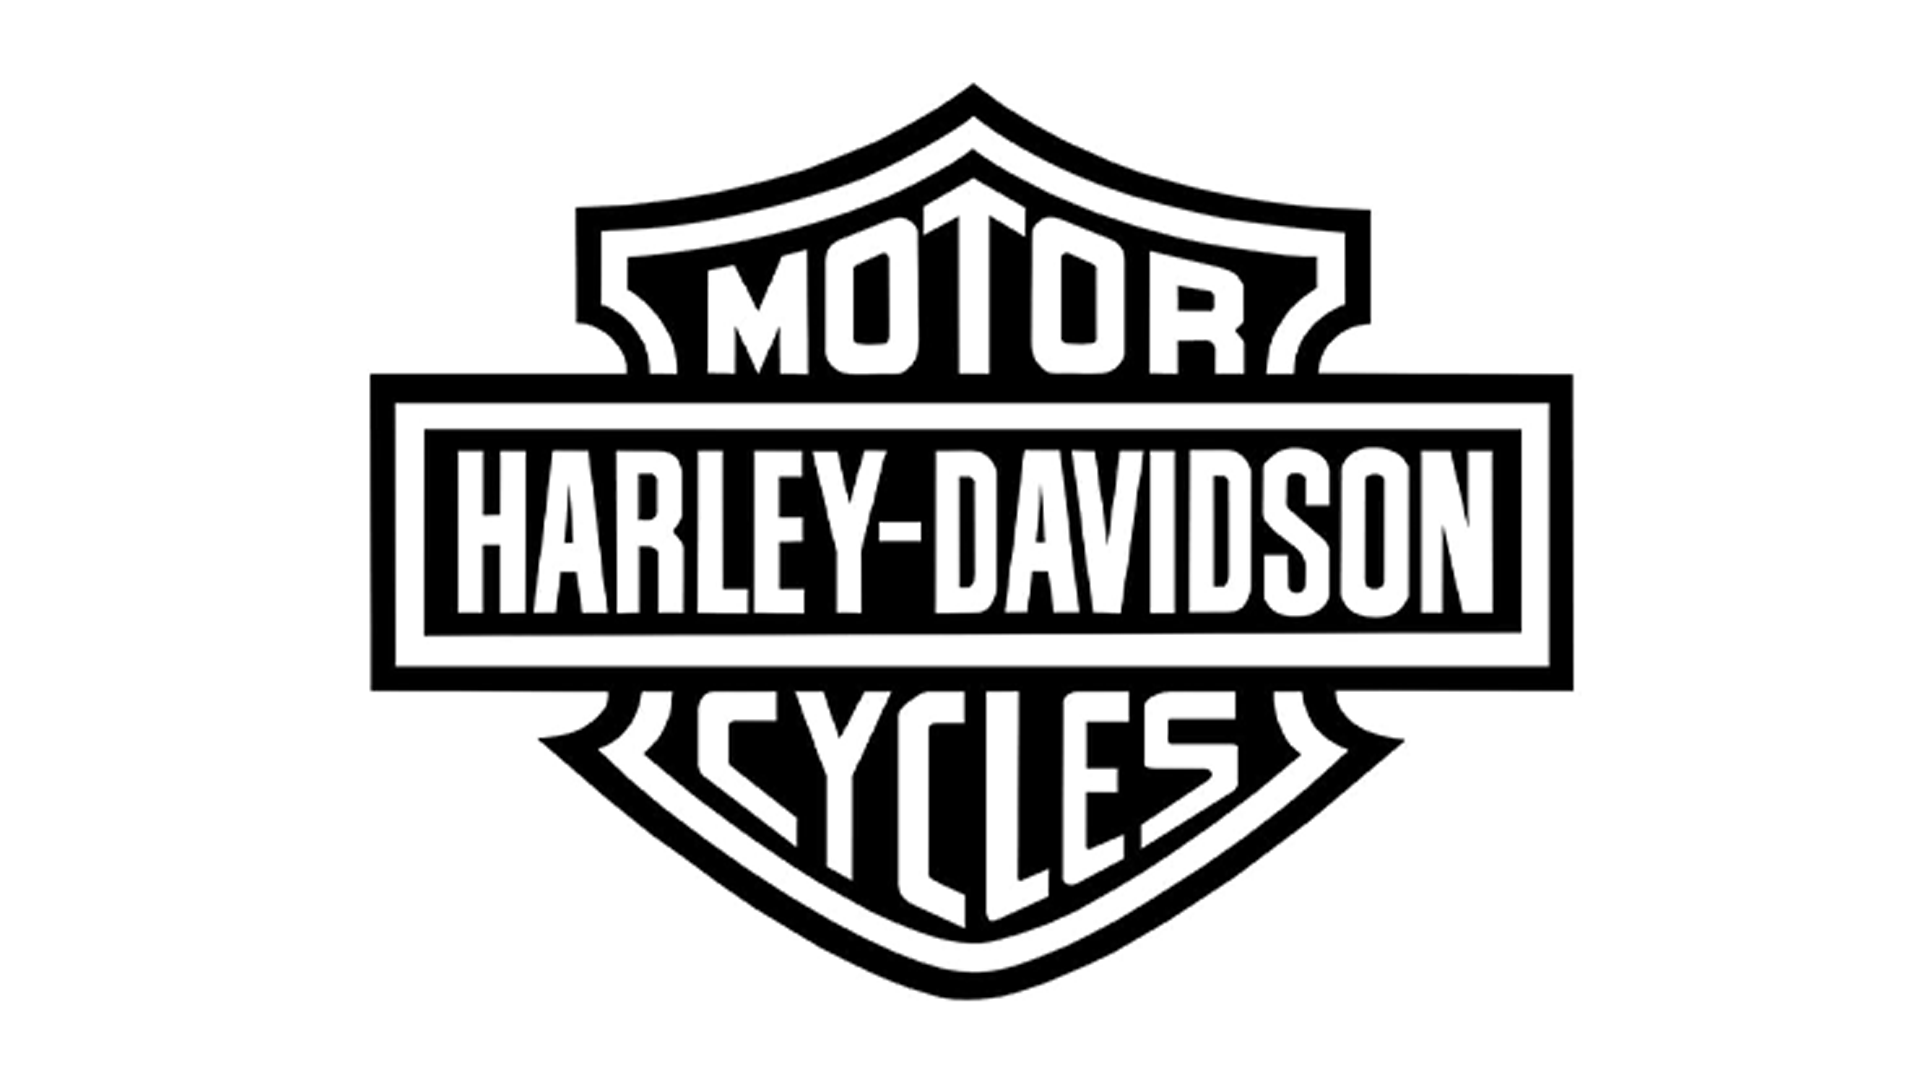 1965 - 2003 Harley-Davidson logo